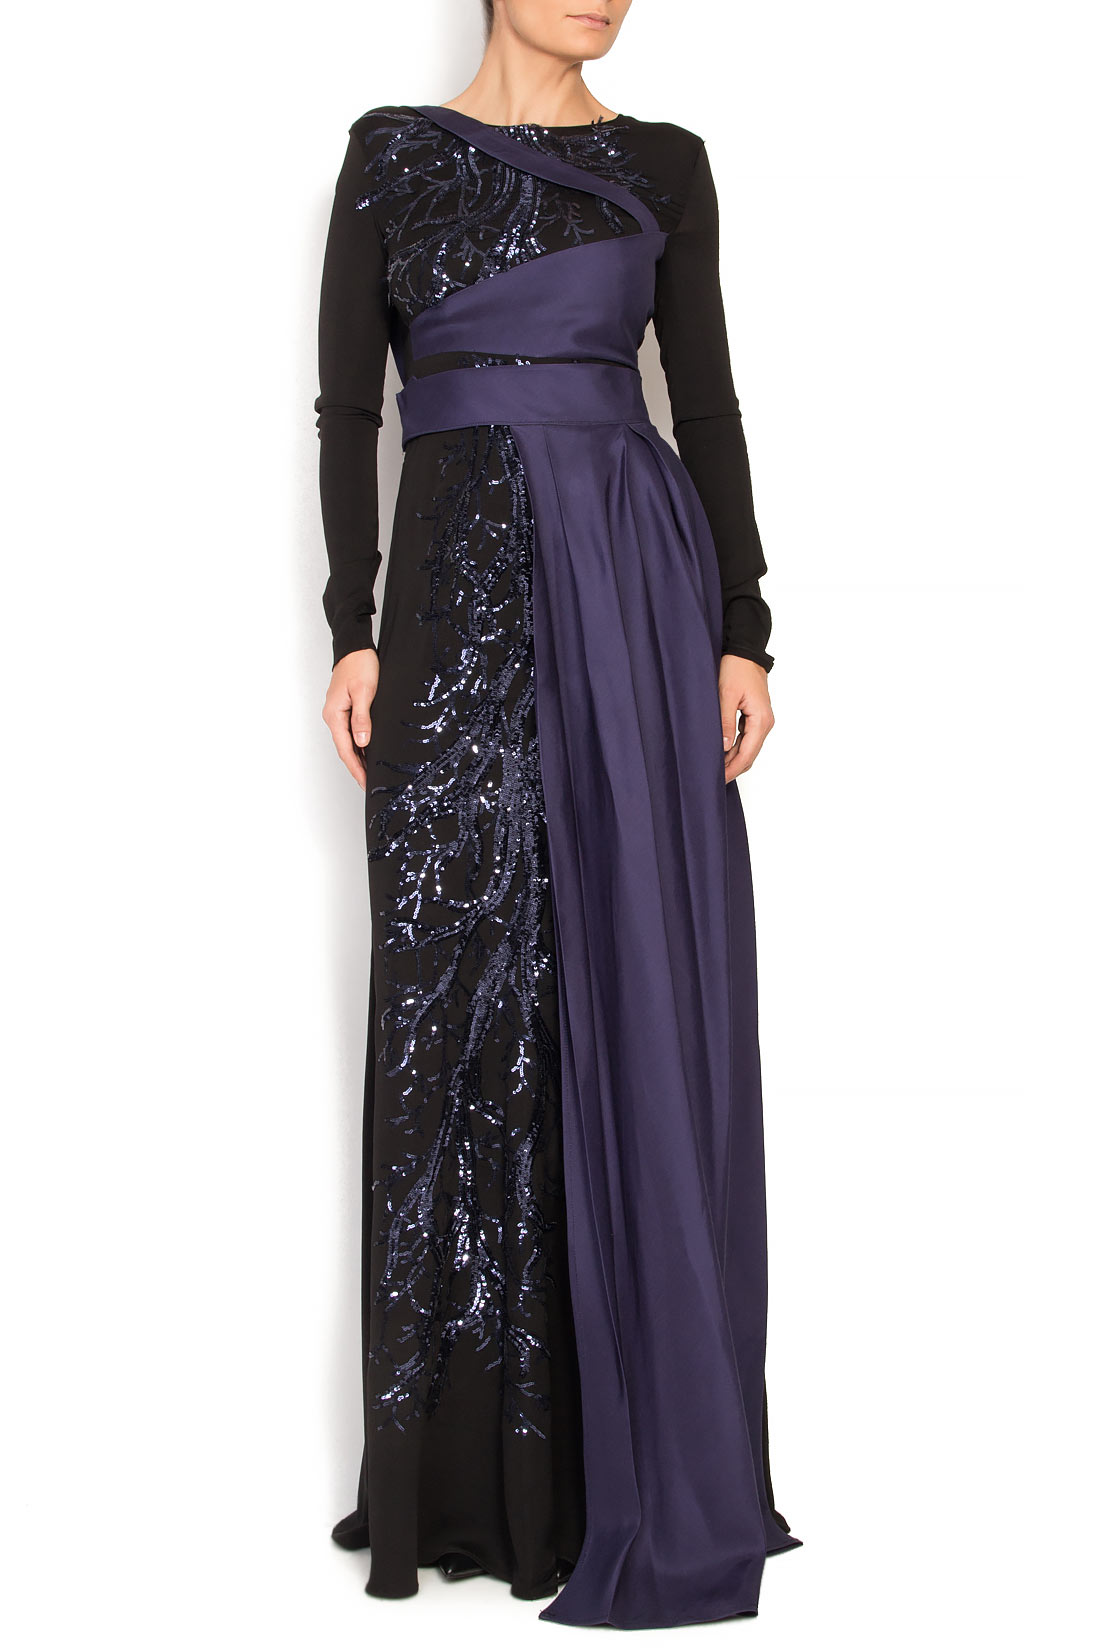 Veil maxi dress with sequins embroidery Simona Semen image 0